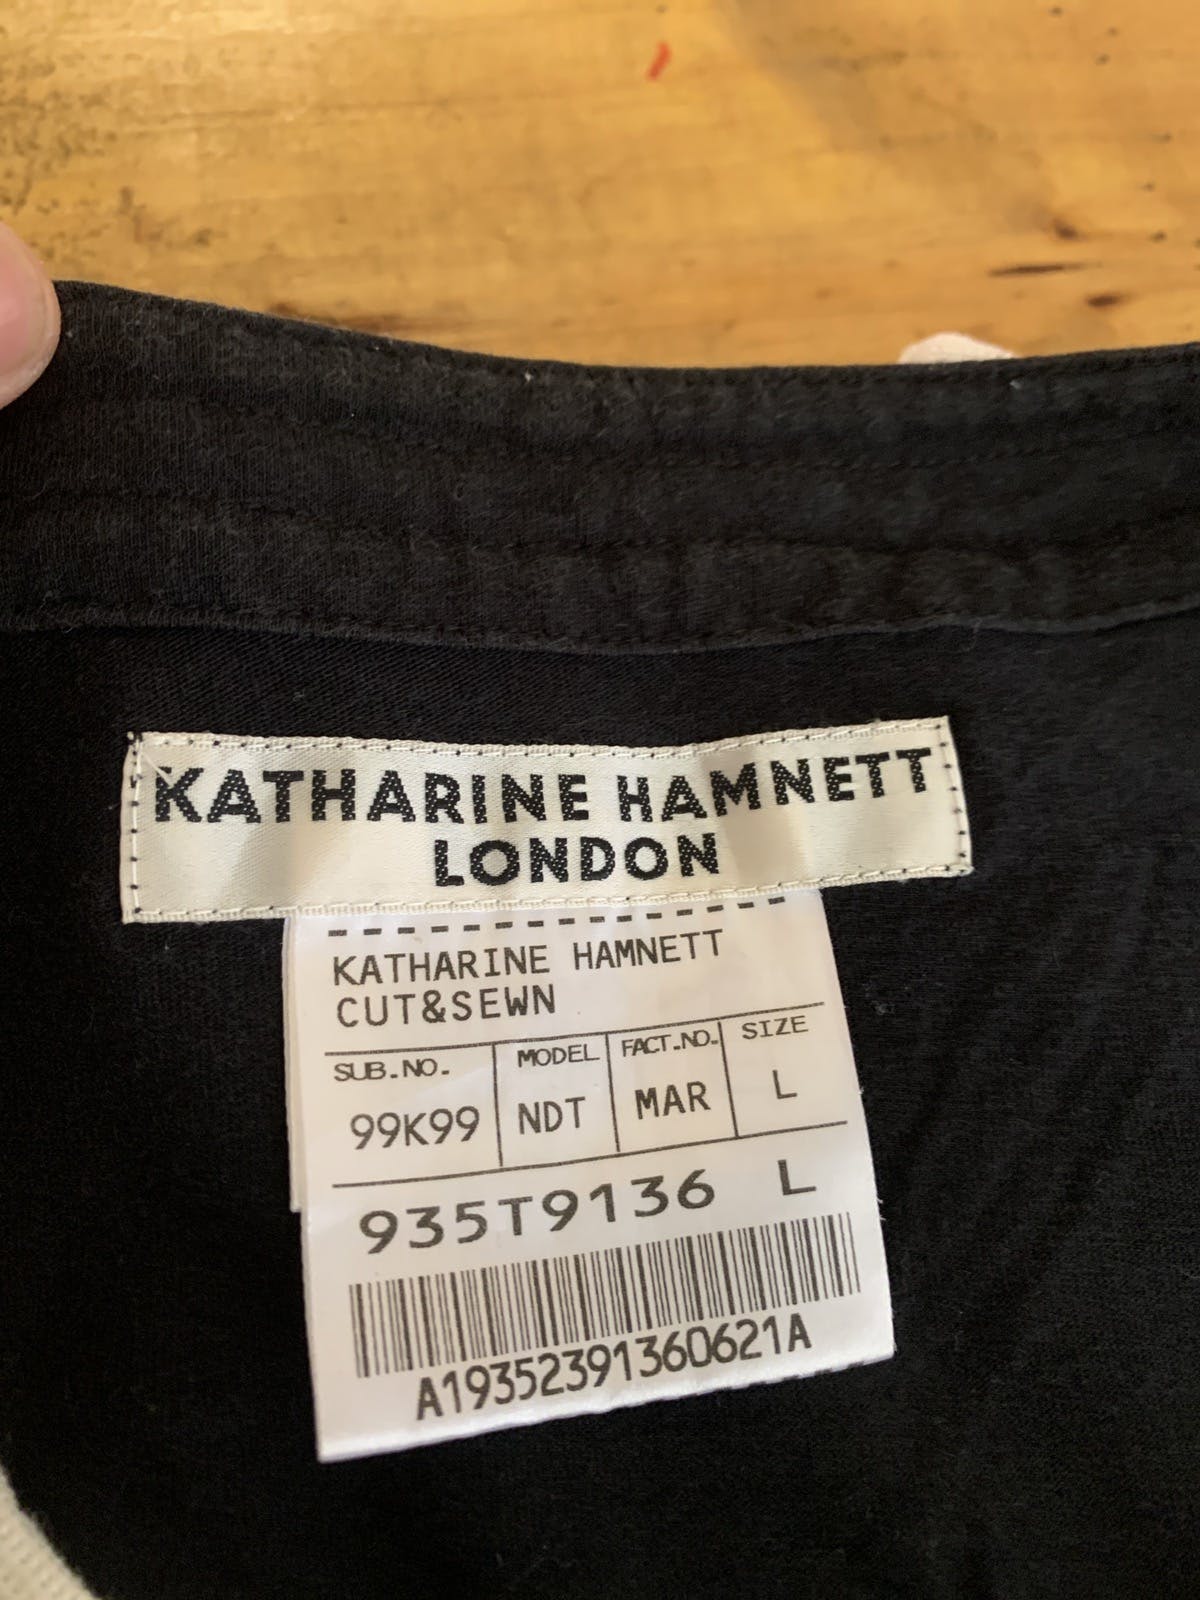 Katharine hamnett london cut & sewn Wear - 8